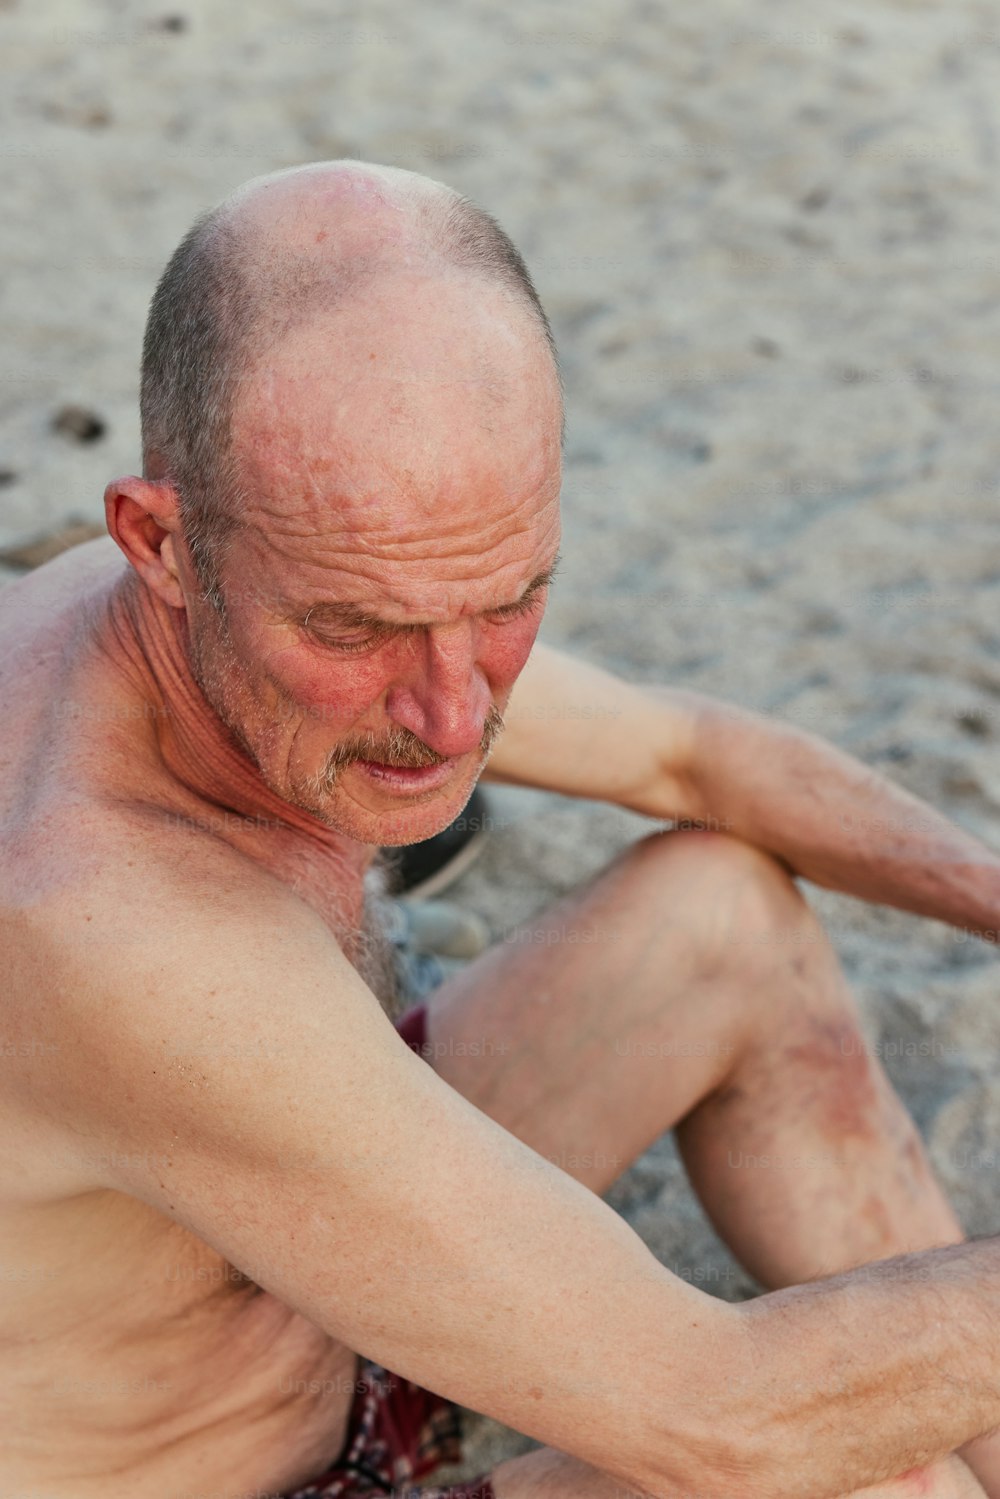 Un uomo seduto sulla spiaggia con un frisbee in mano